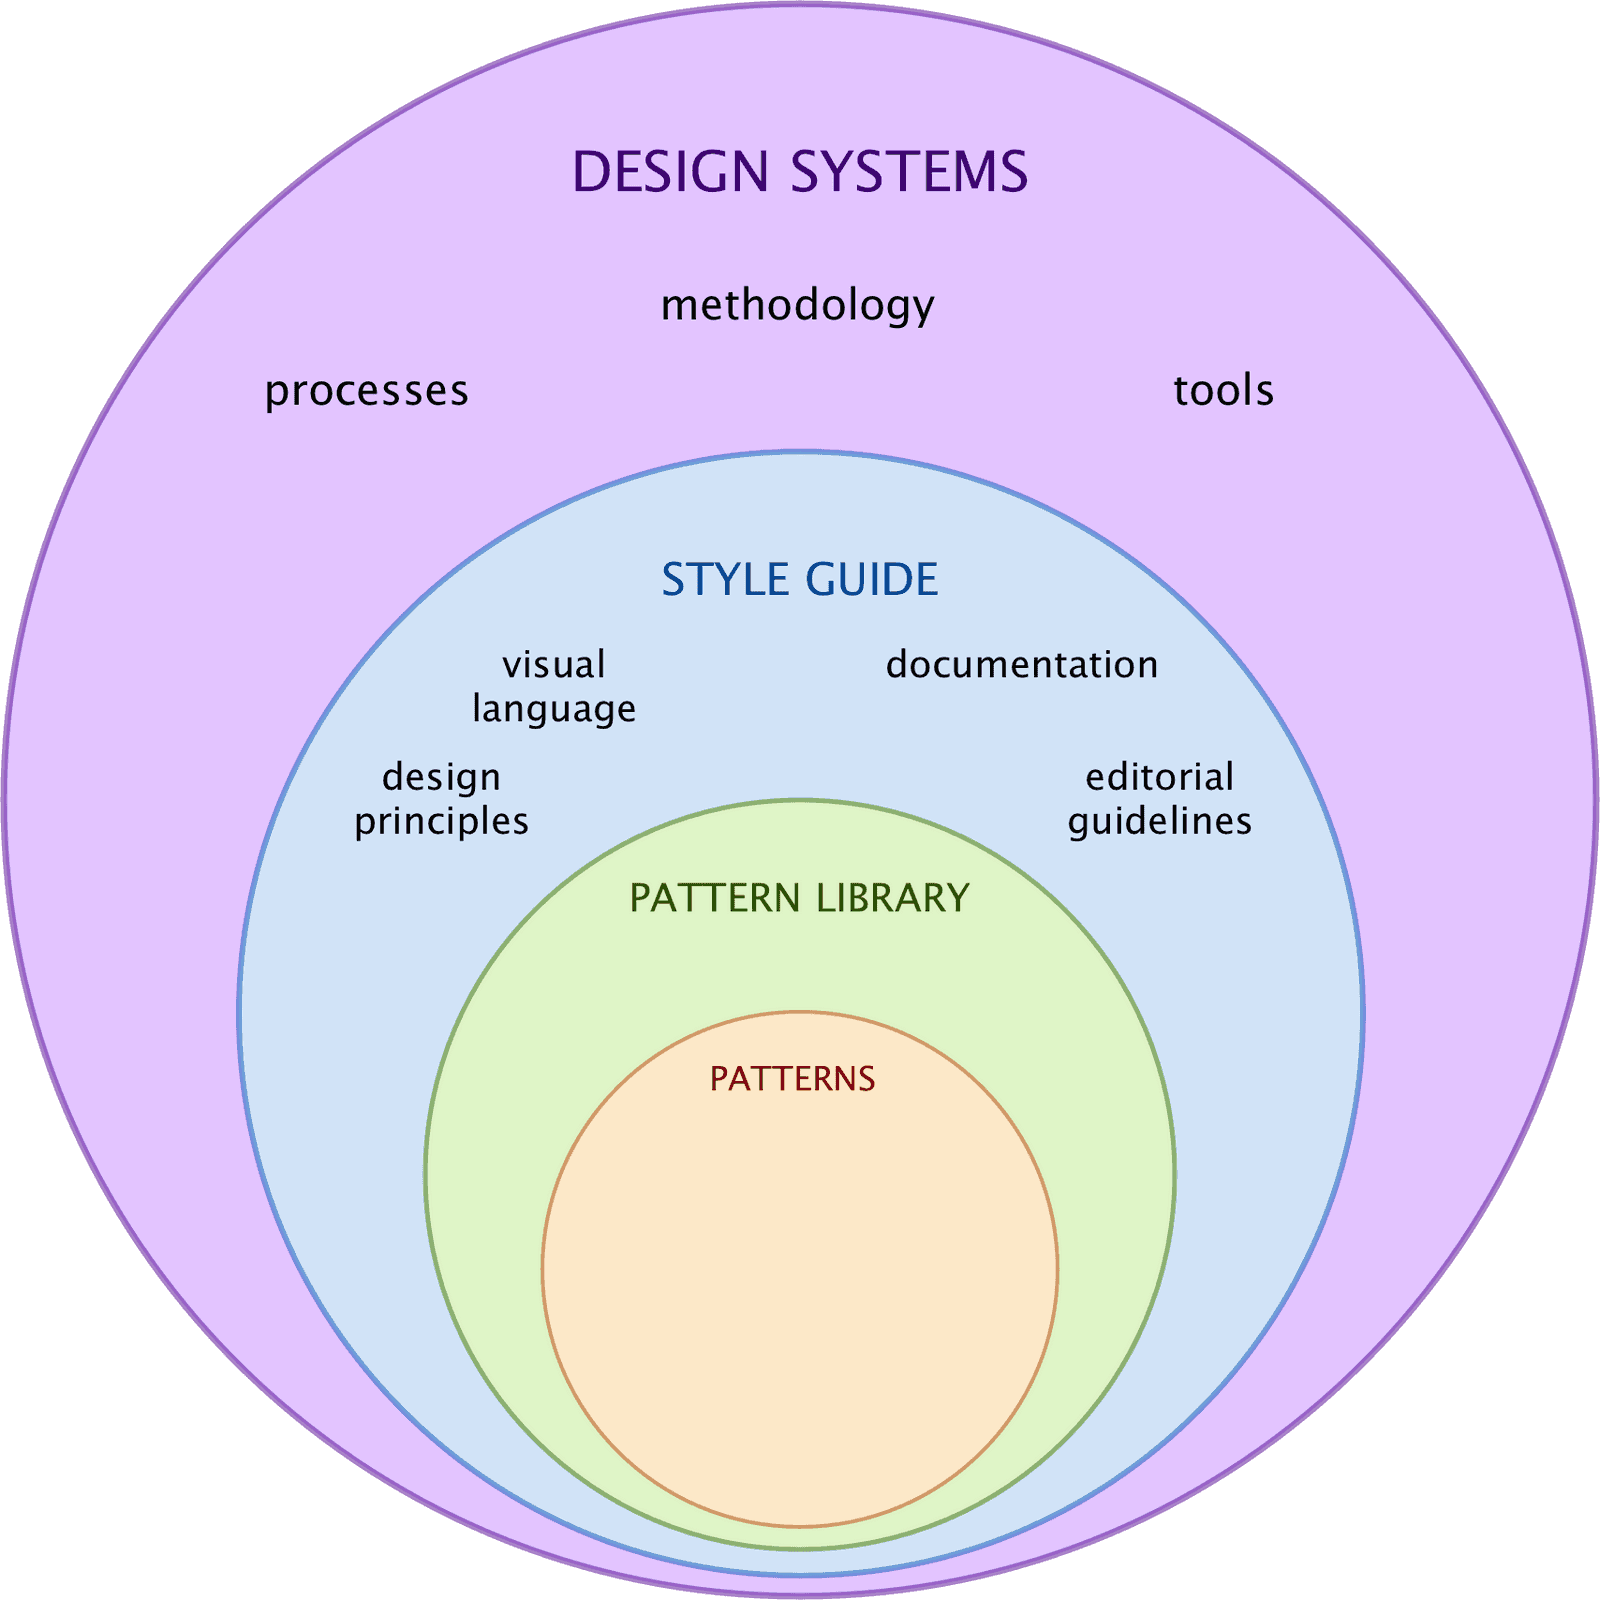 Figure 11. Design systems